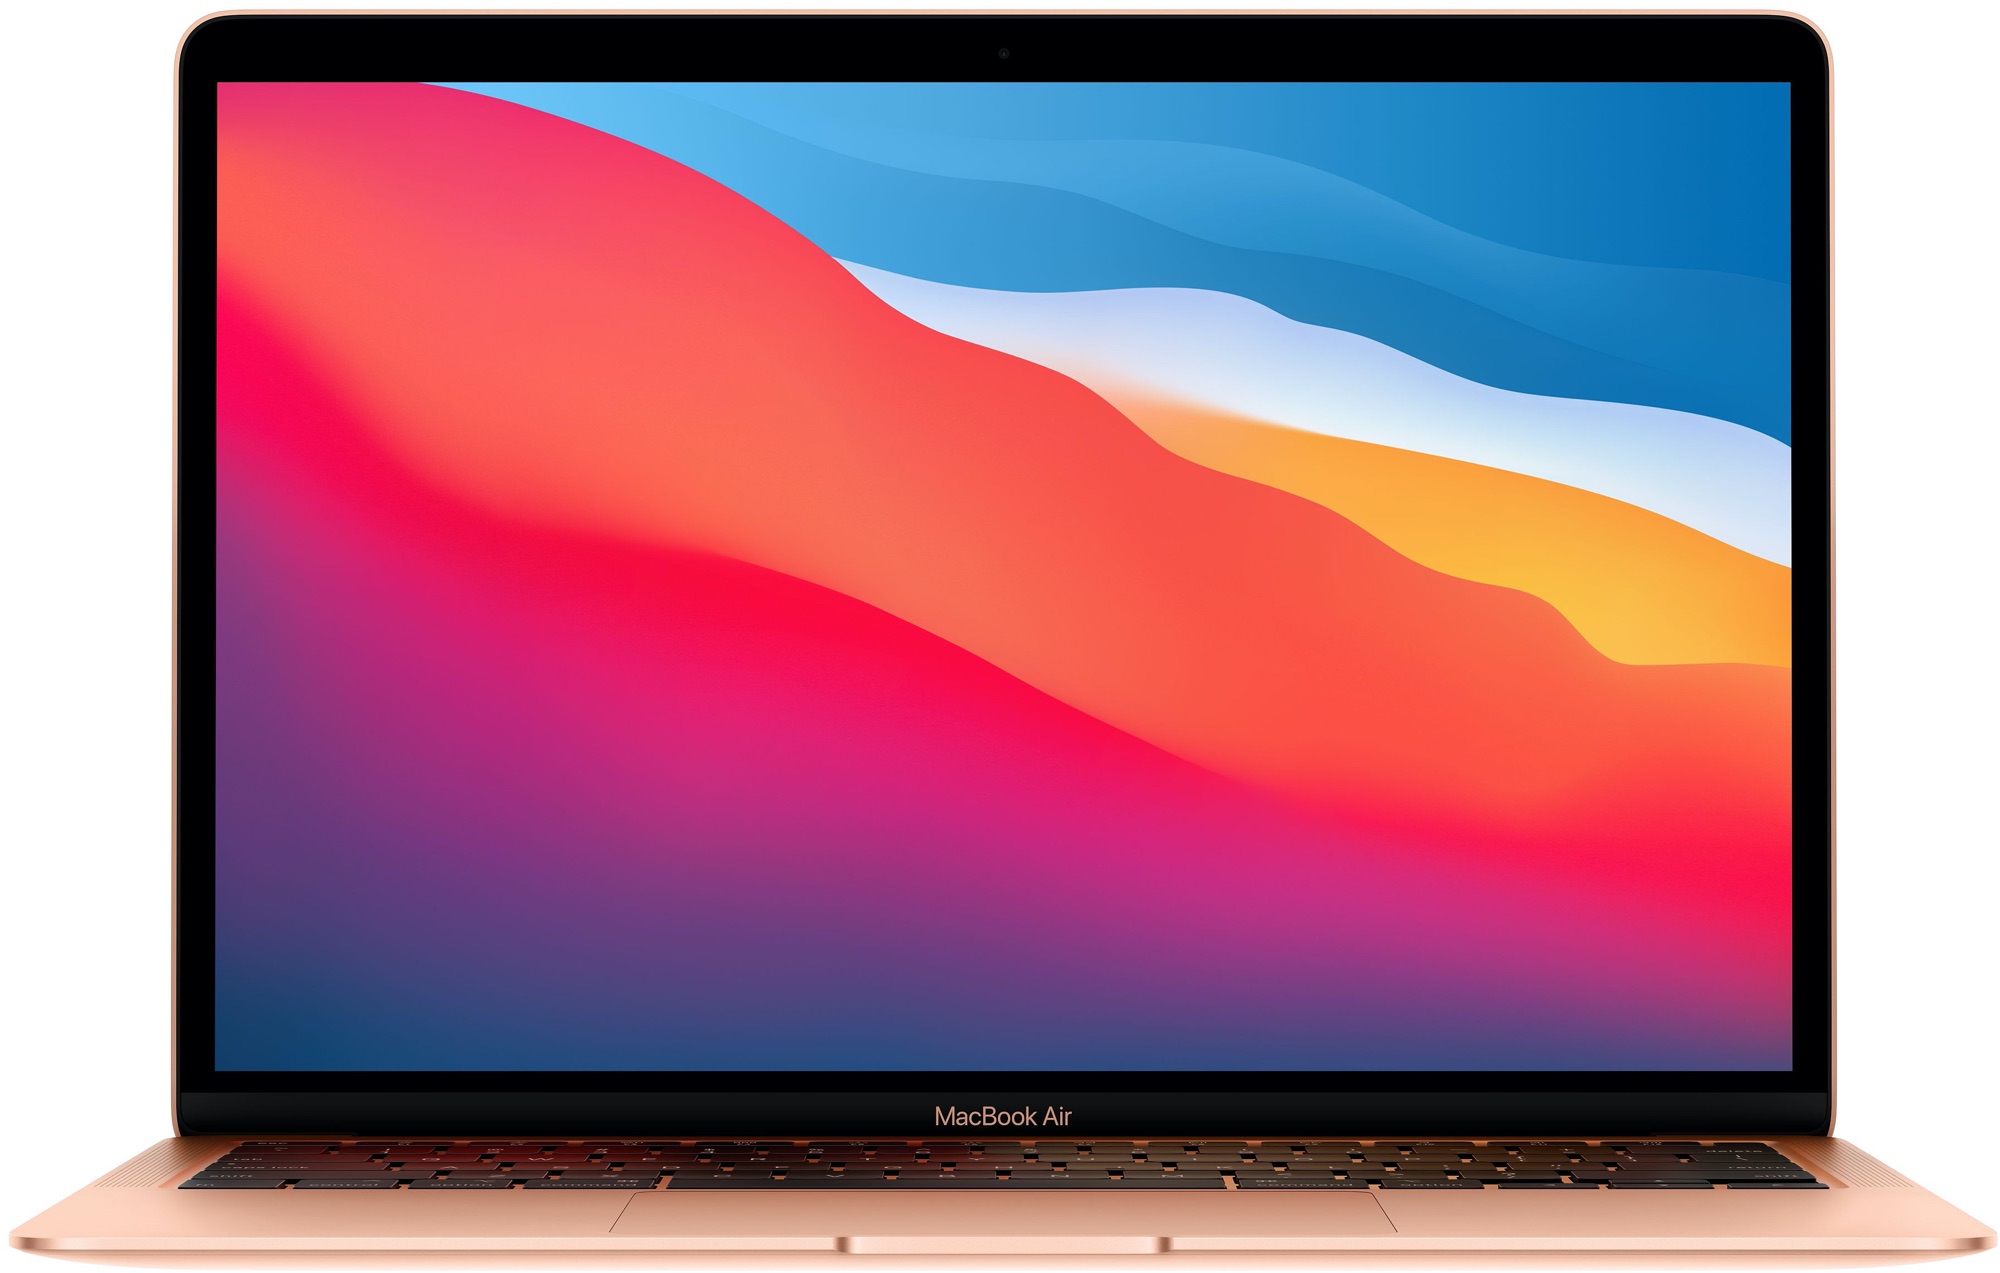 Apple macbook laptop latest model todataurl for retina display